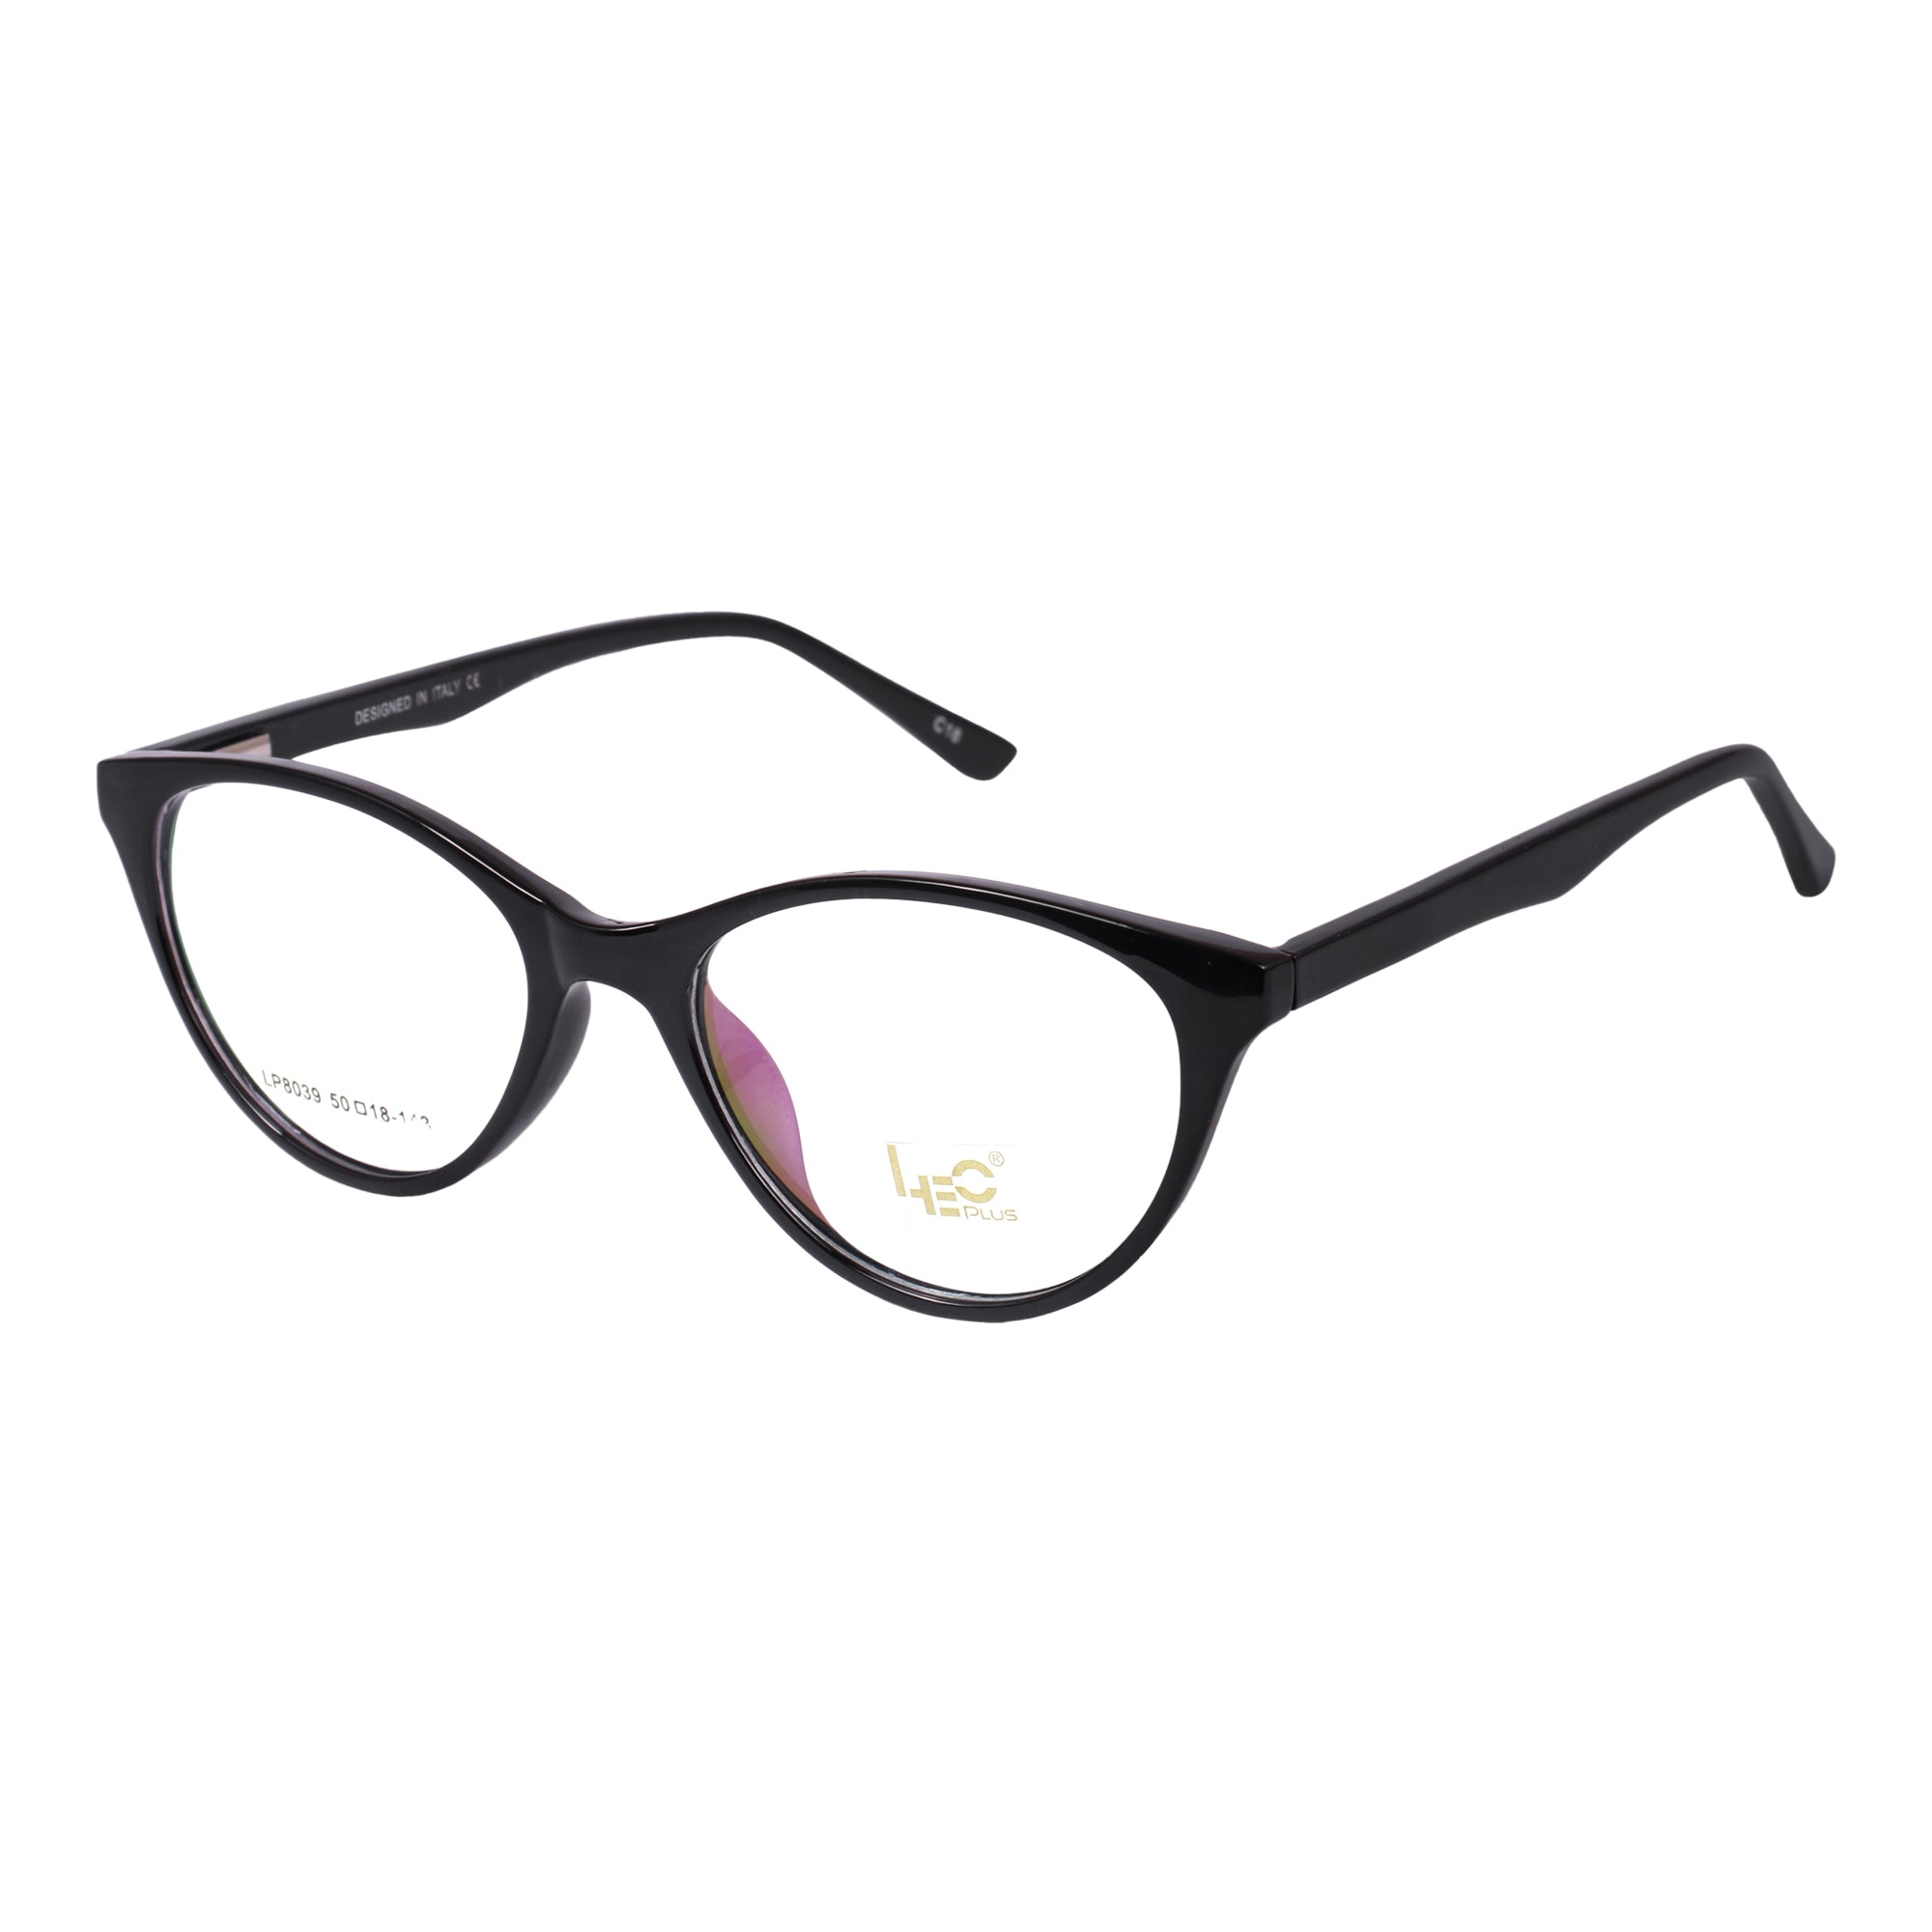 Black Cateye Rimmed Eyeglasses - L8039-C18